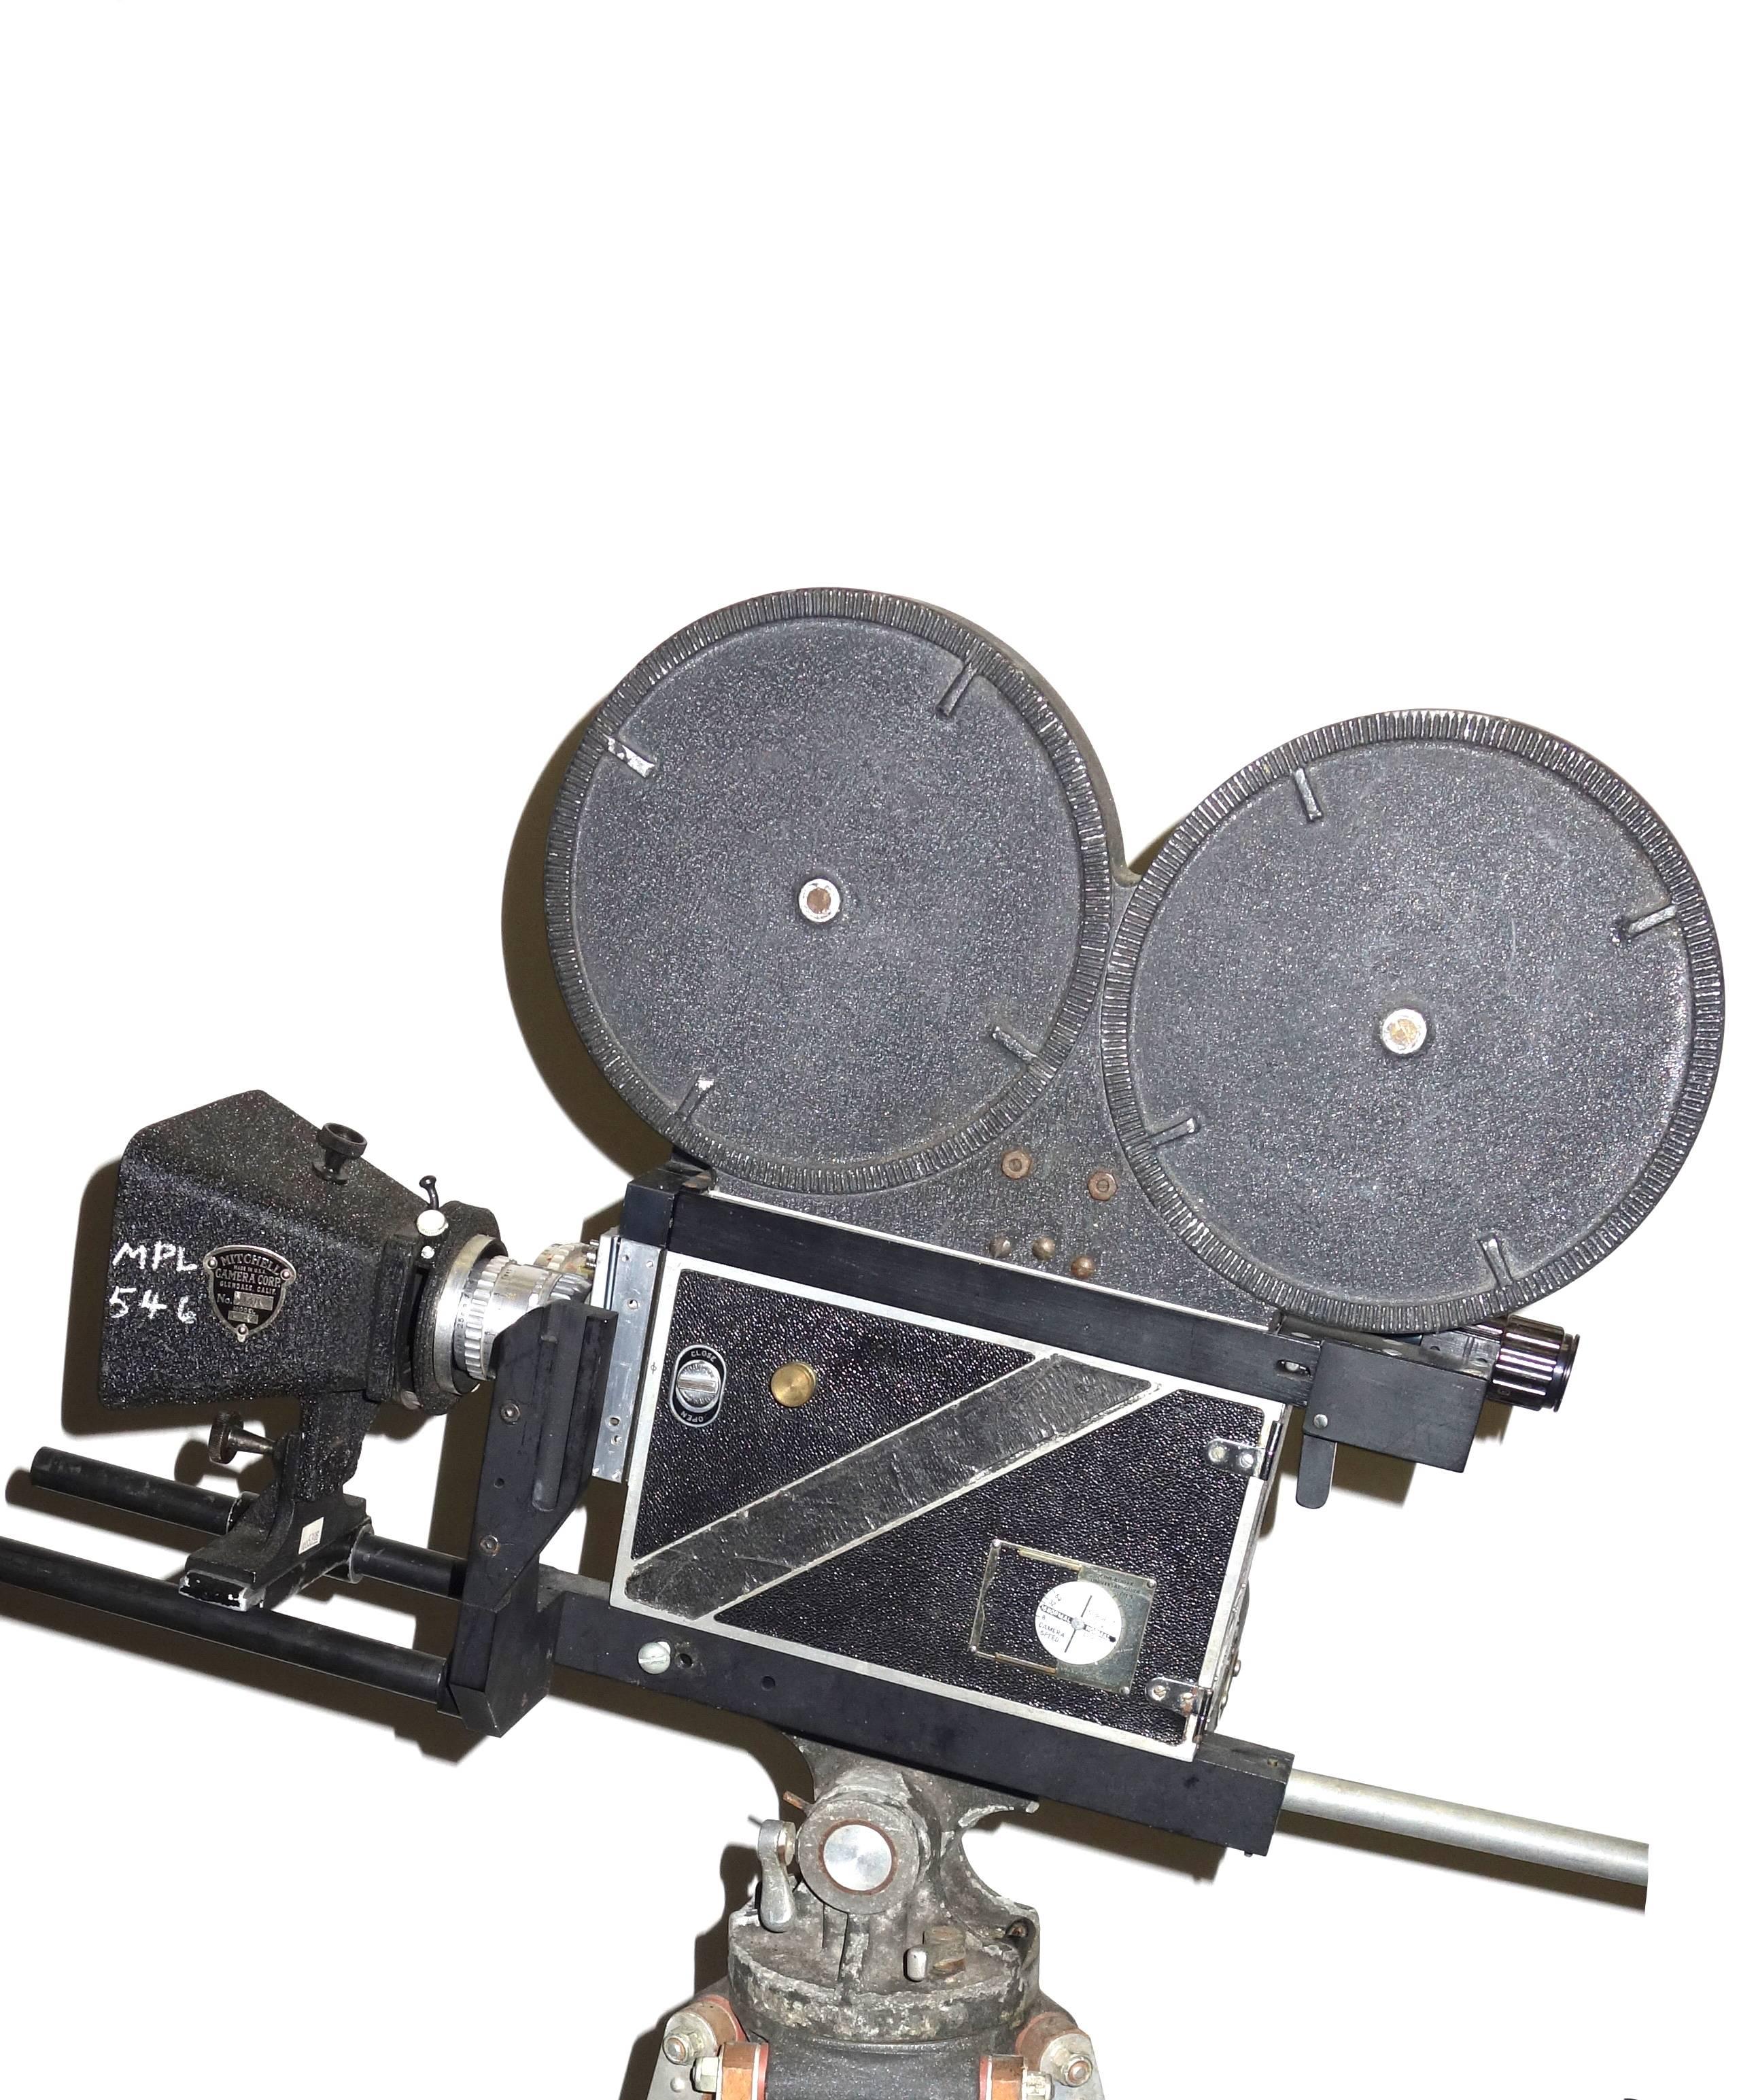 1930 movie camera